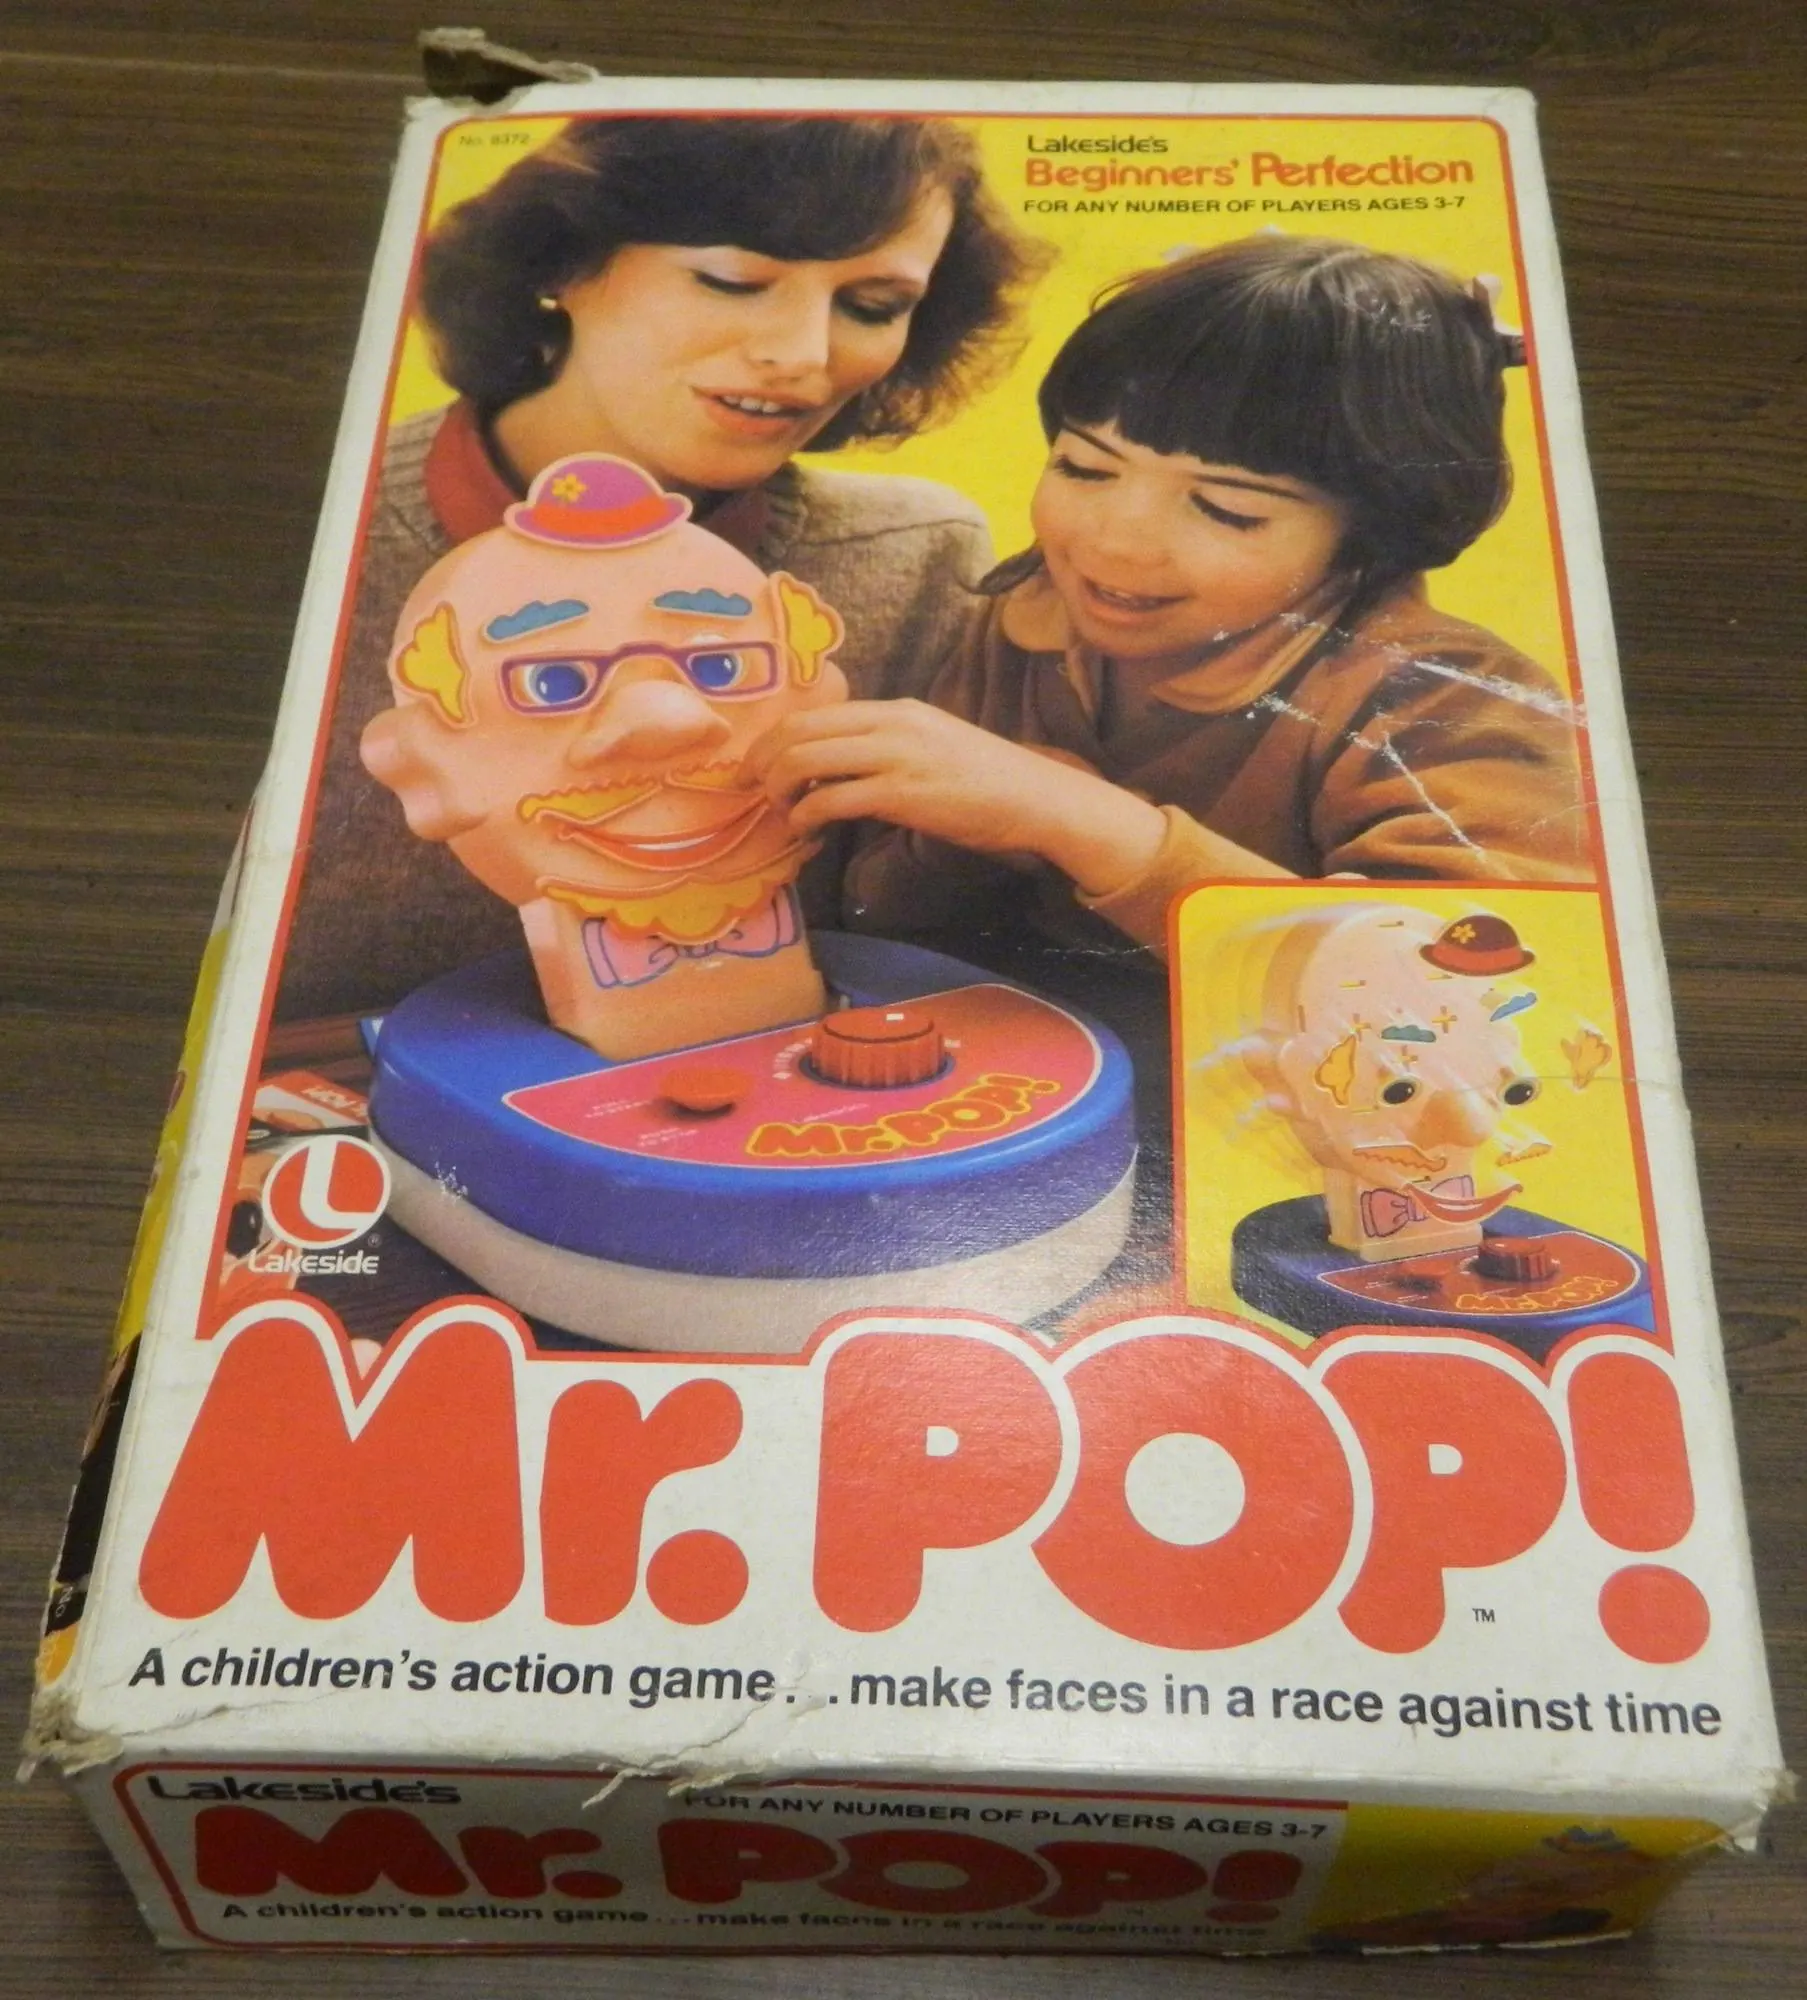 Box for Mr. Pop